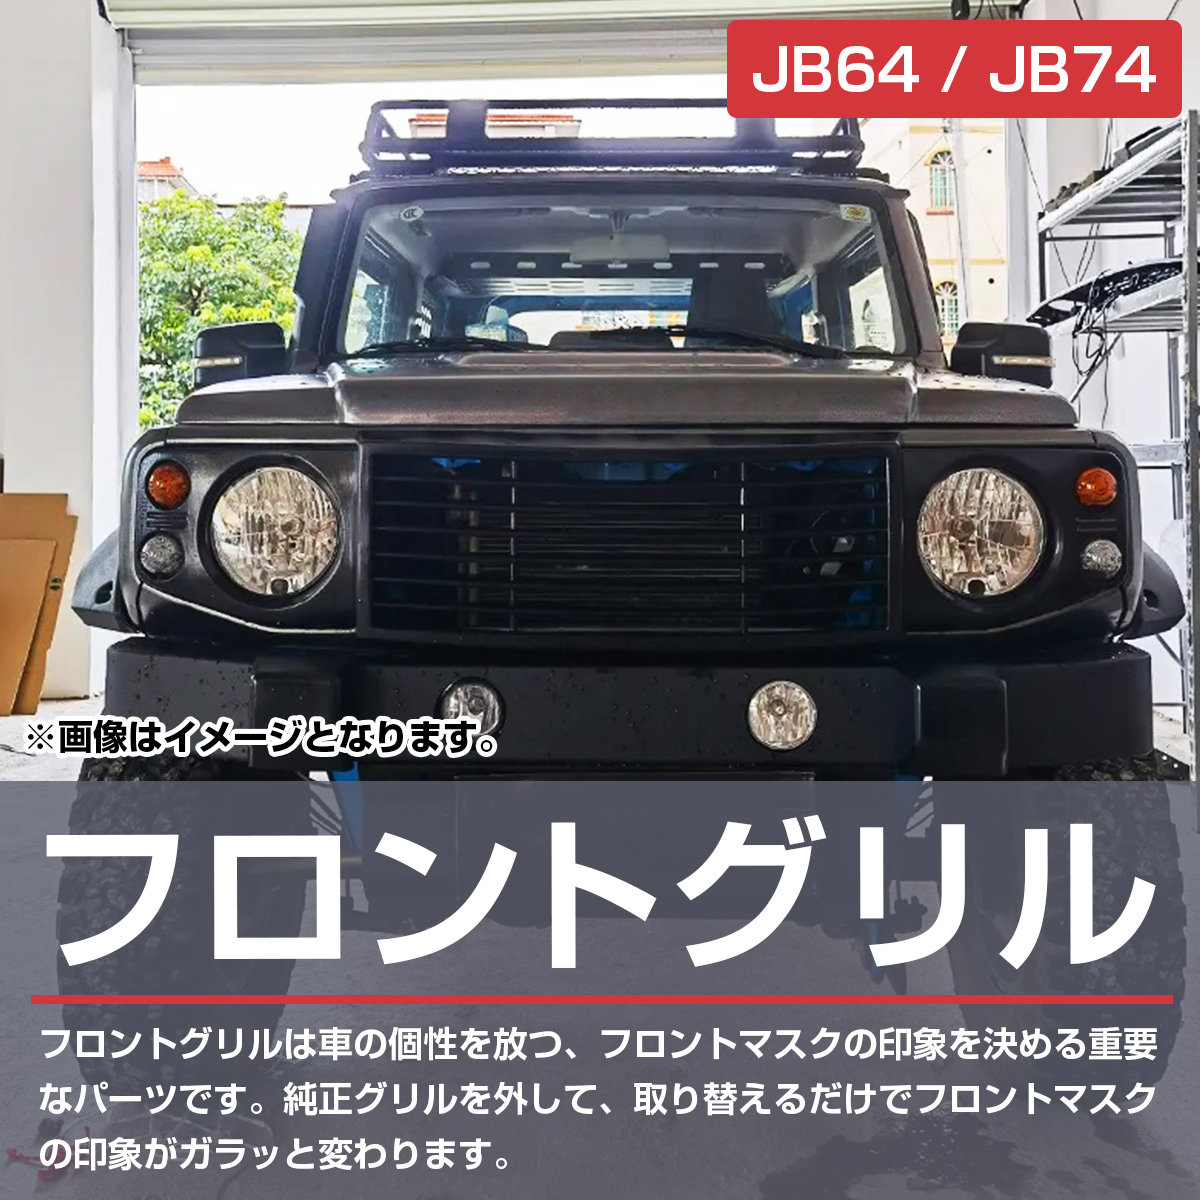 JB64 ジムニー フロントグリル ブラック JB74 シエラ 装着可能 レトロ ディフェンダー スタイル ランプ付き ブラック/黒_画像2